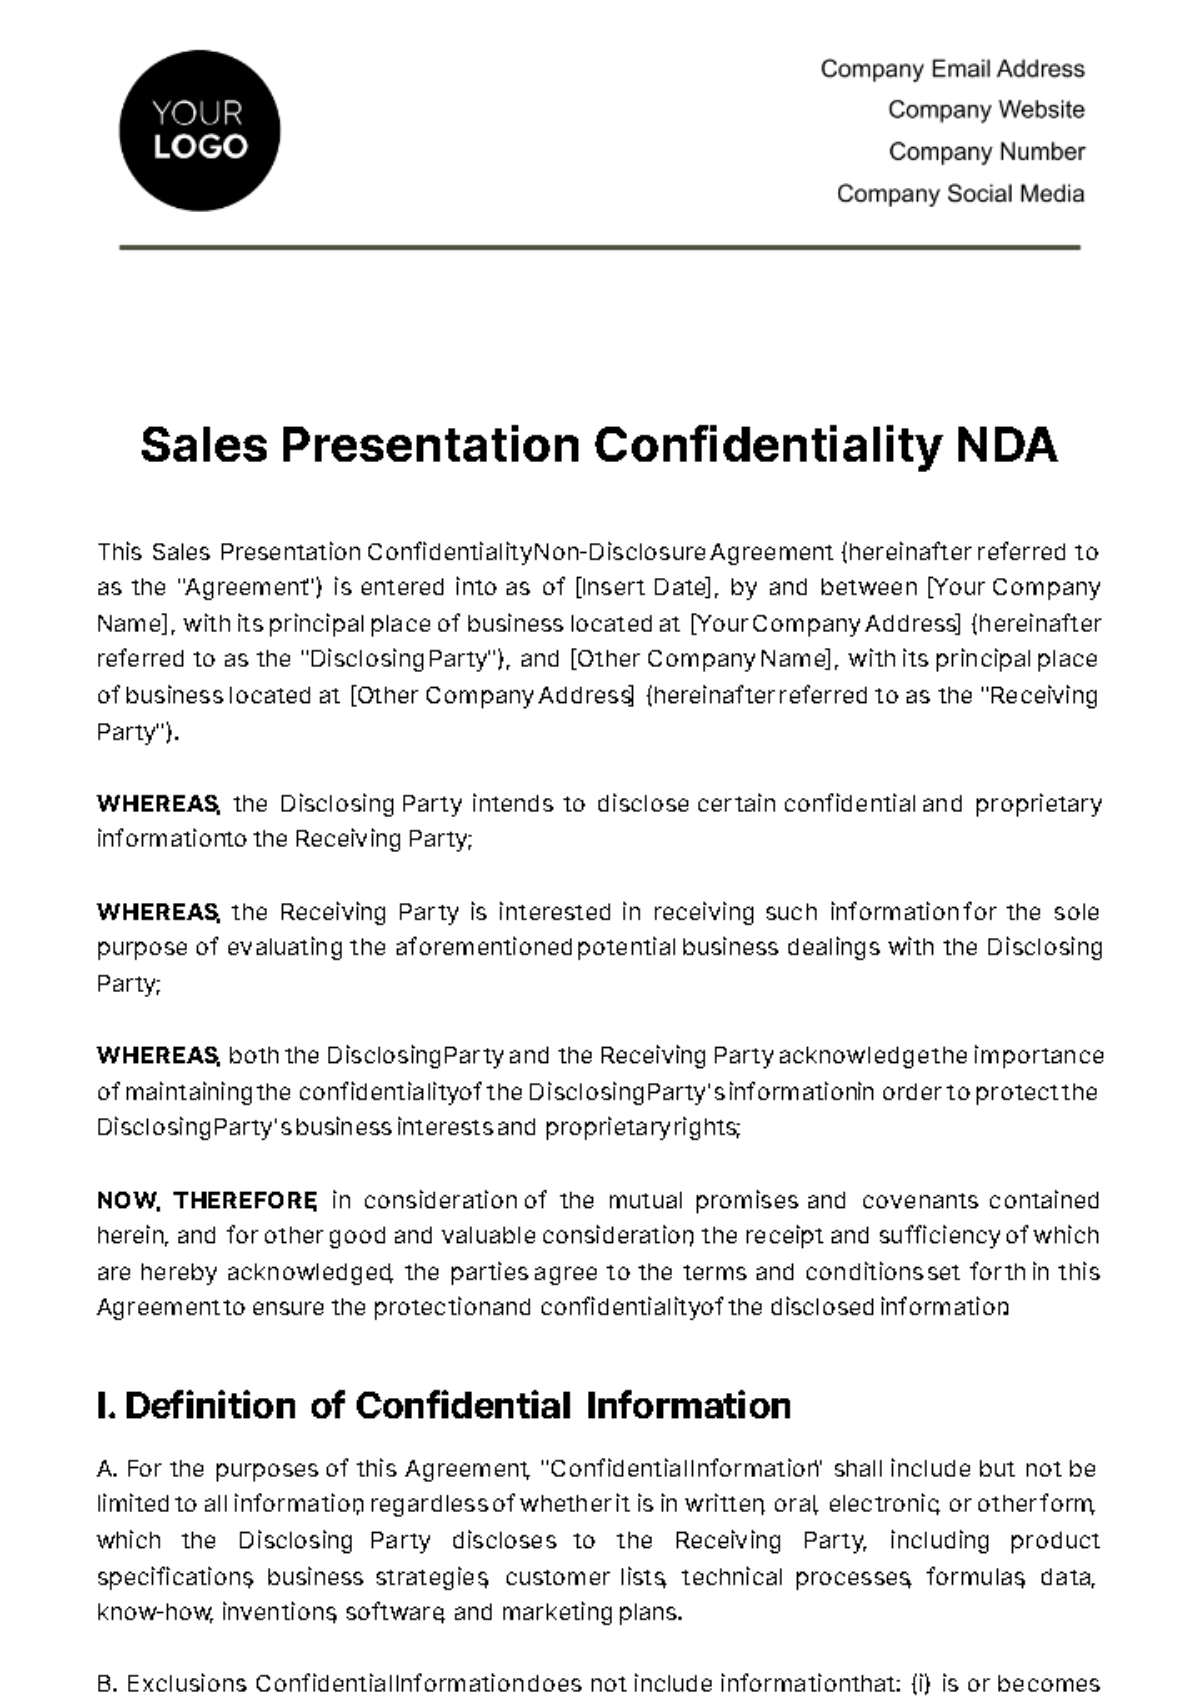 Sales Presentation Confidentiality NDA Template